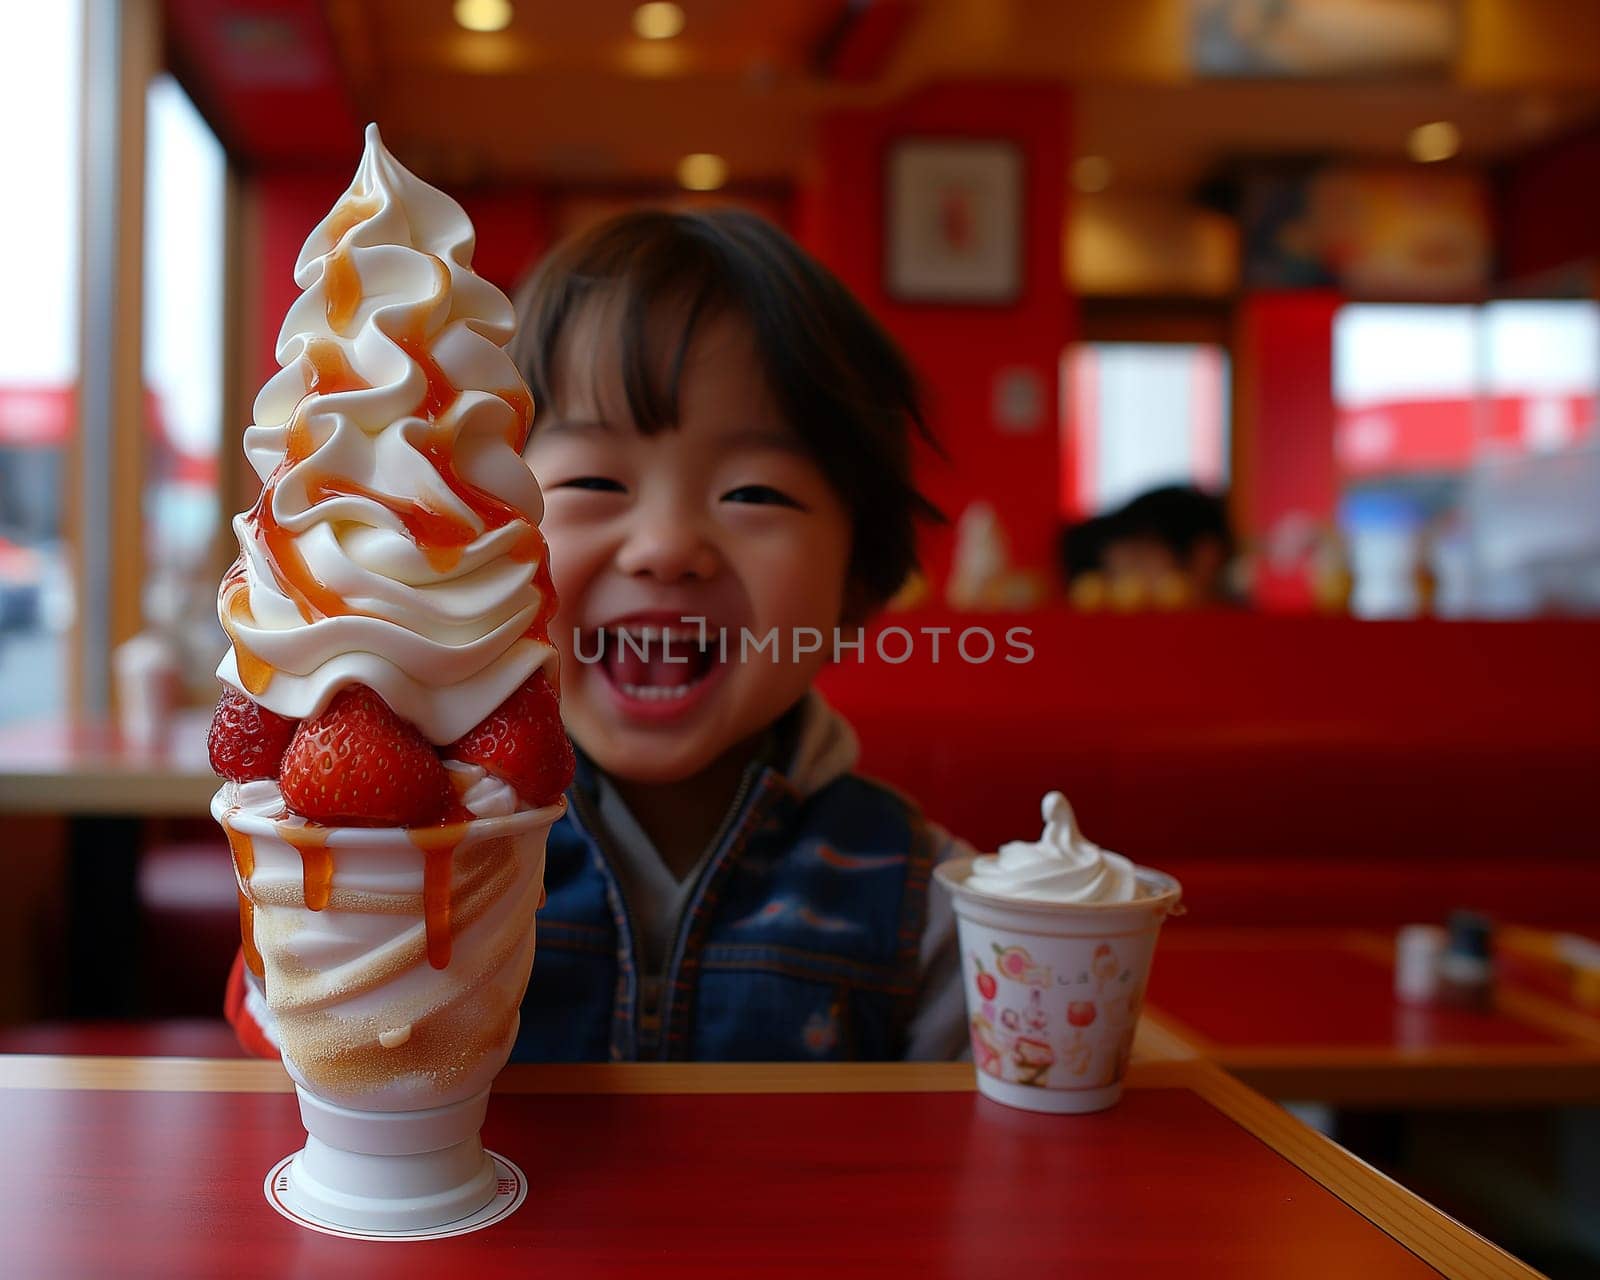 A joyful child smiles beside a large strawberry topped soft serve ice cream.